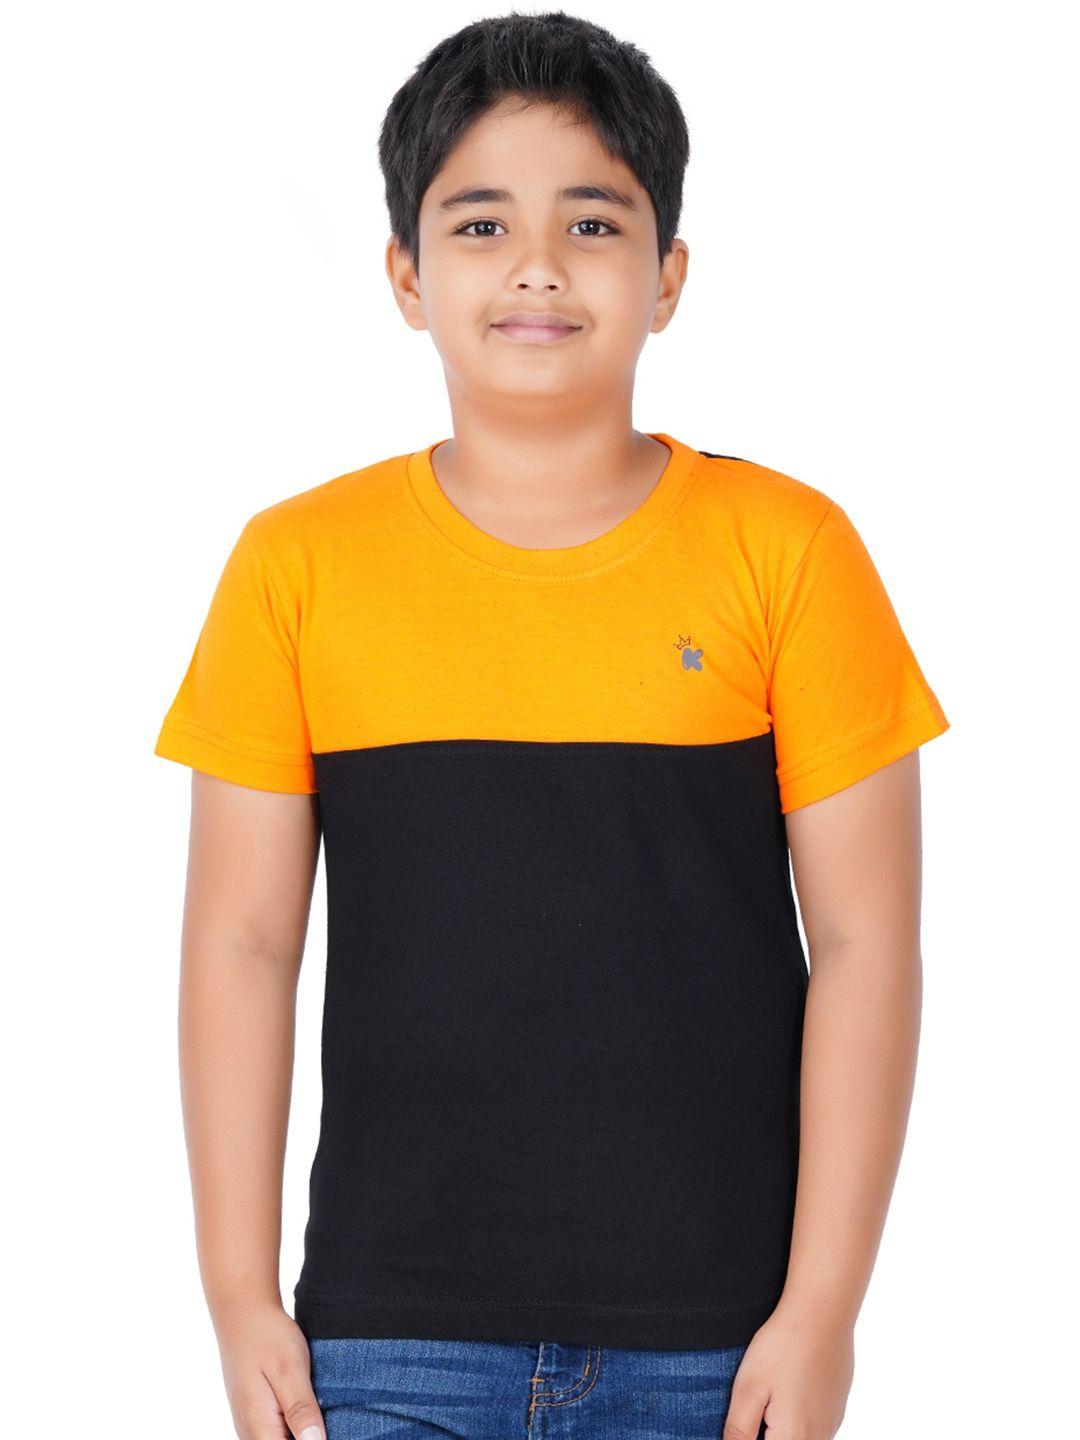 kiddeo boys orange & black colourblocked slim fit t-shirt